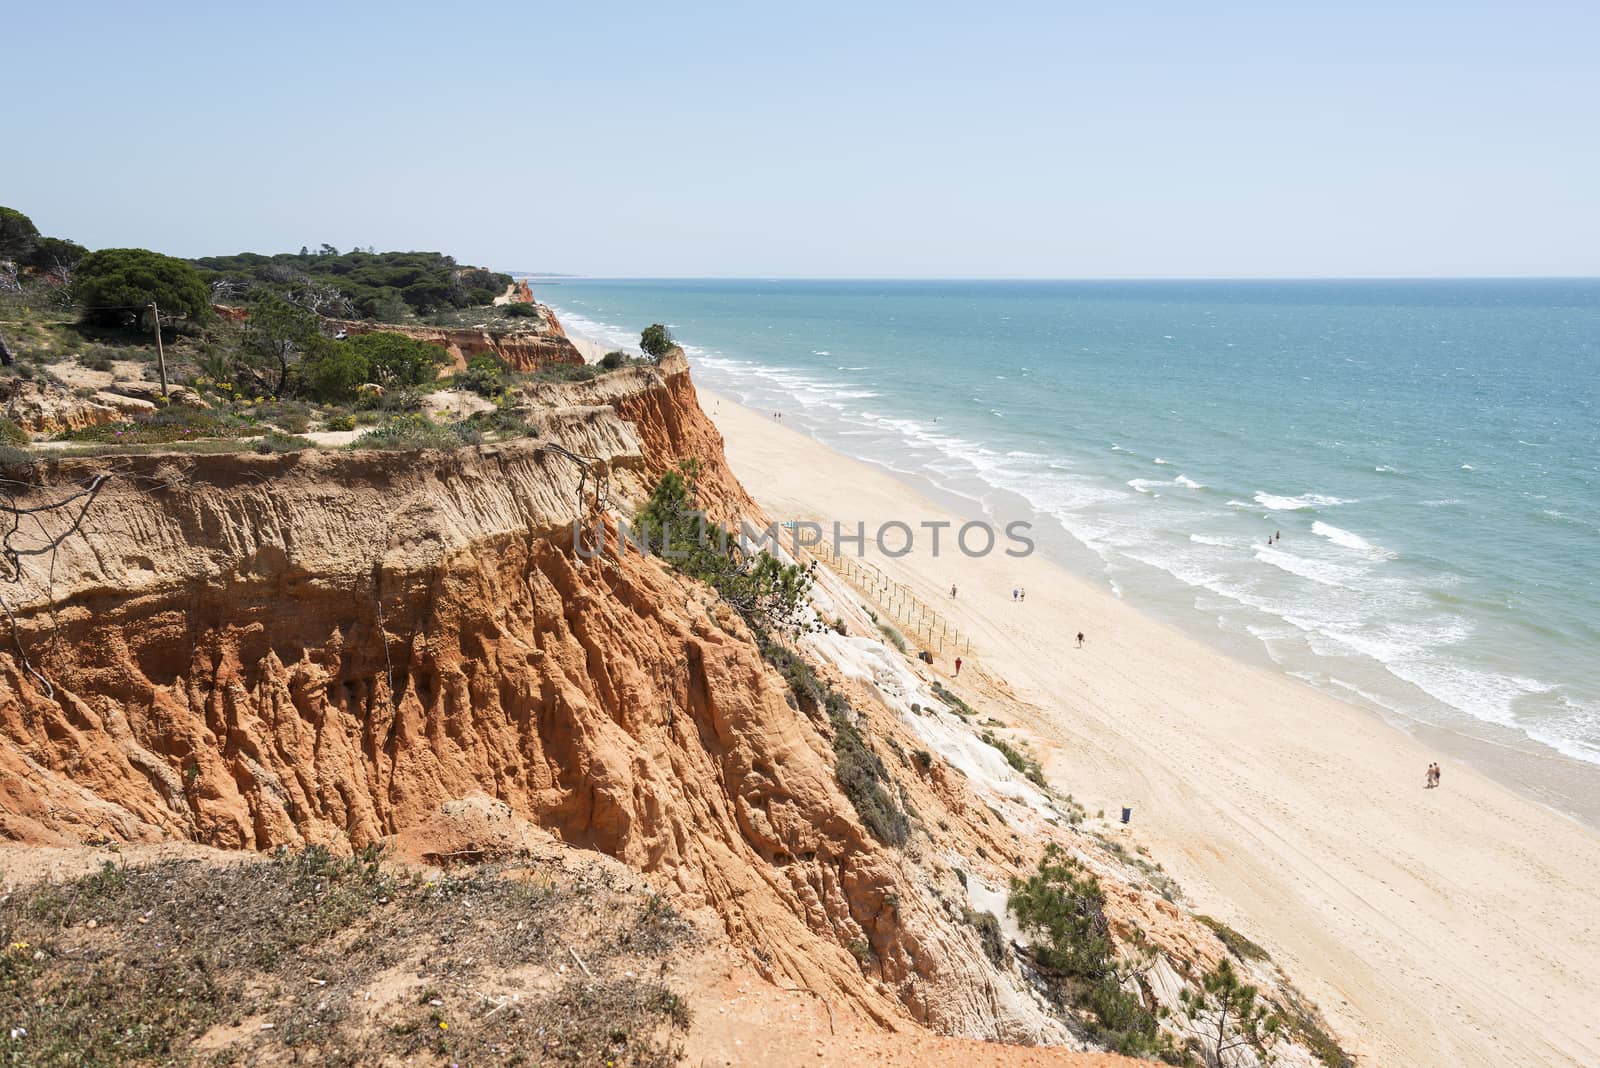 Cliffs at Praia da Falesia near villamoura in portugal area algarve with people walking at the beach